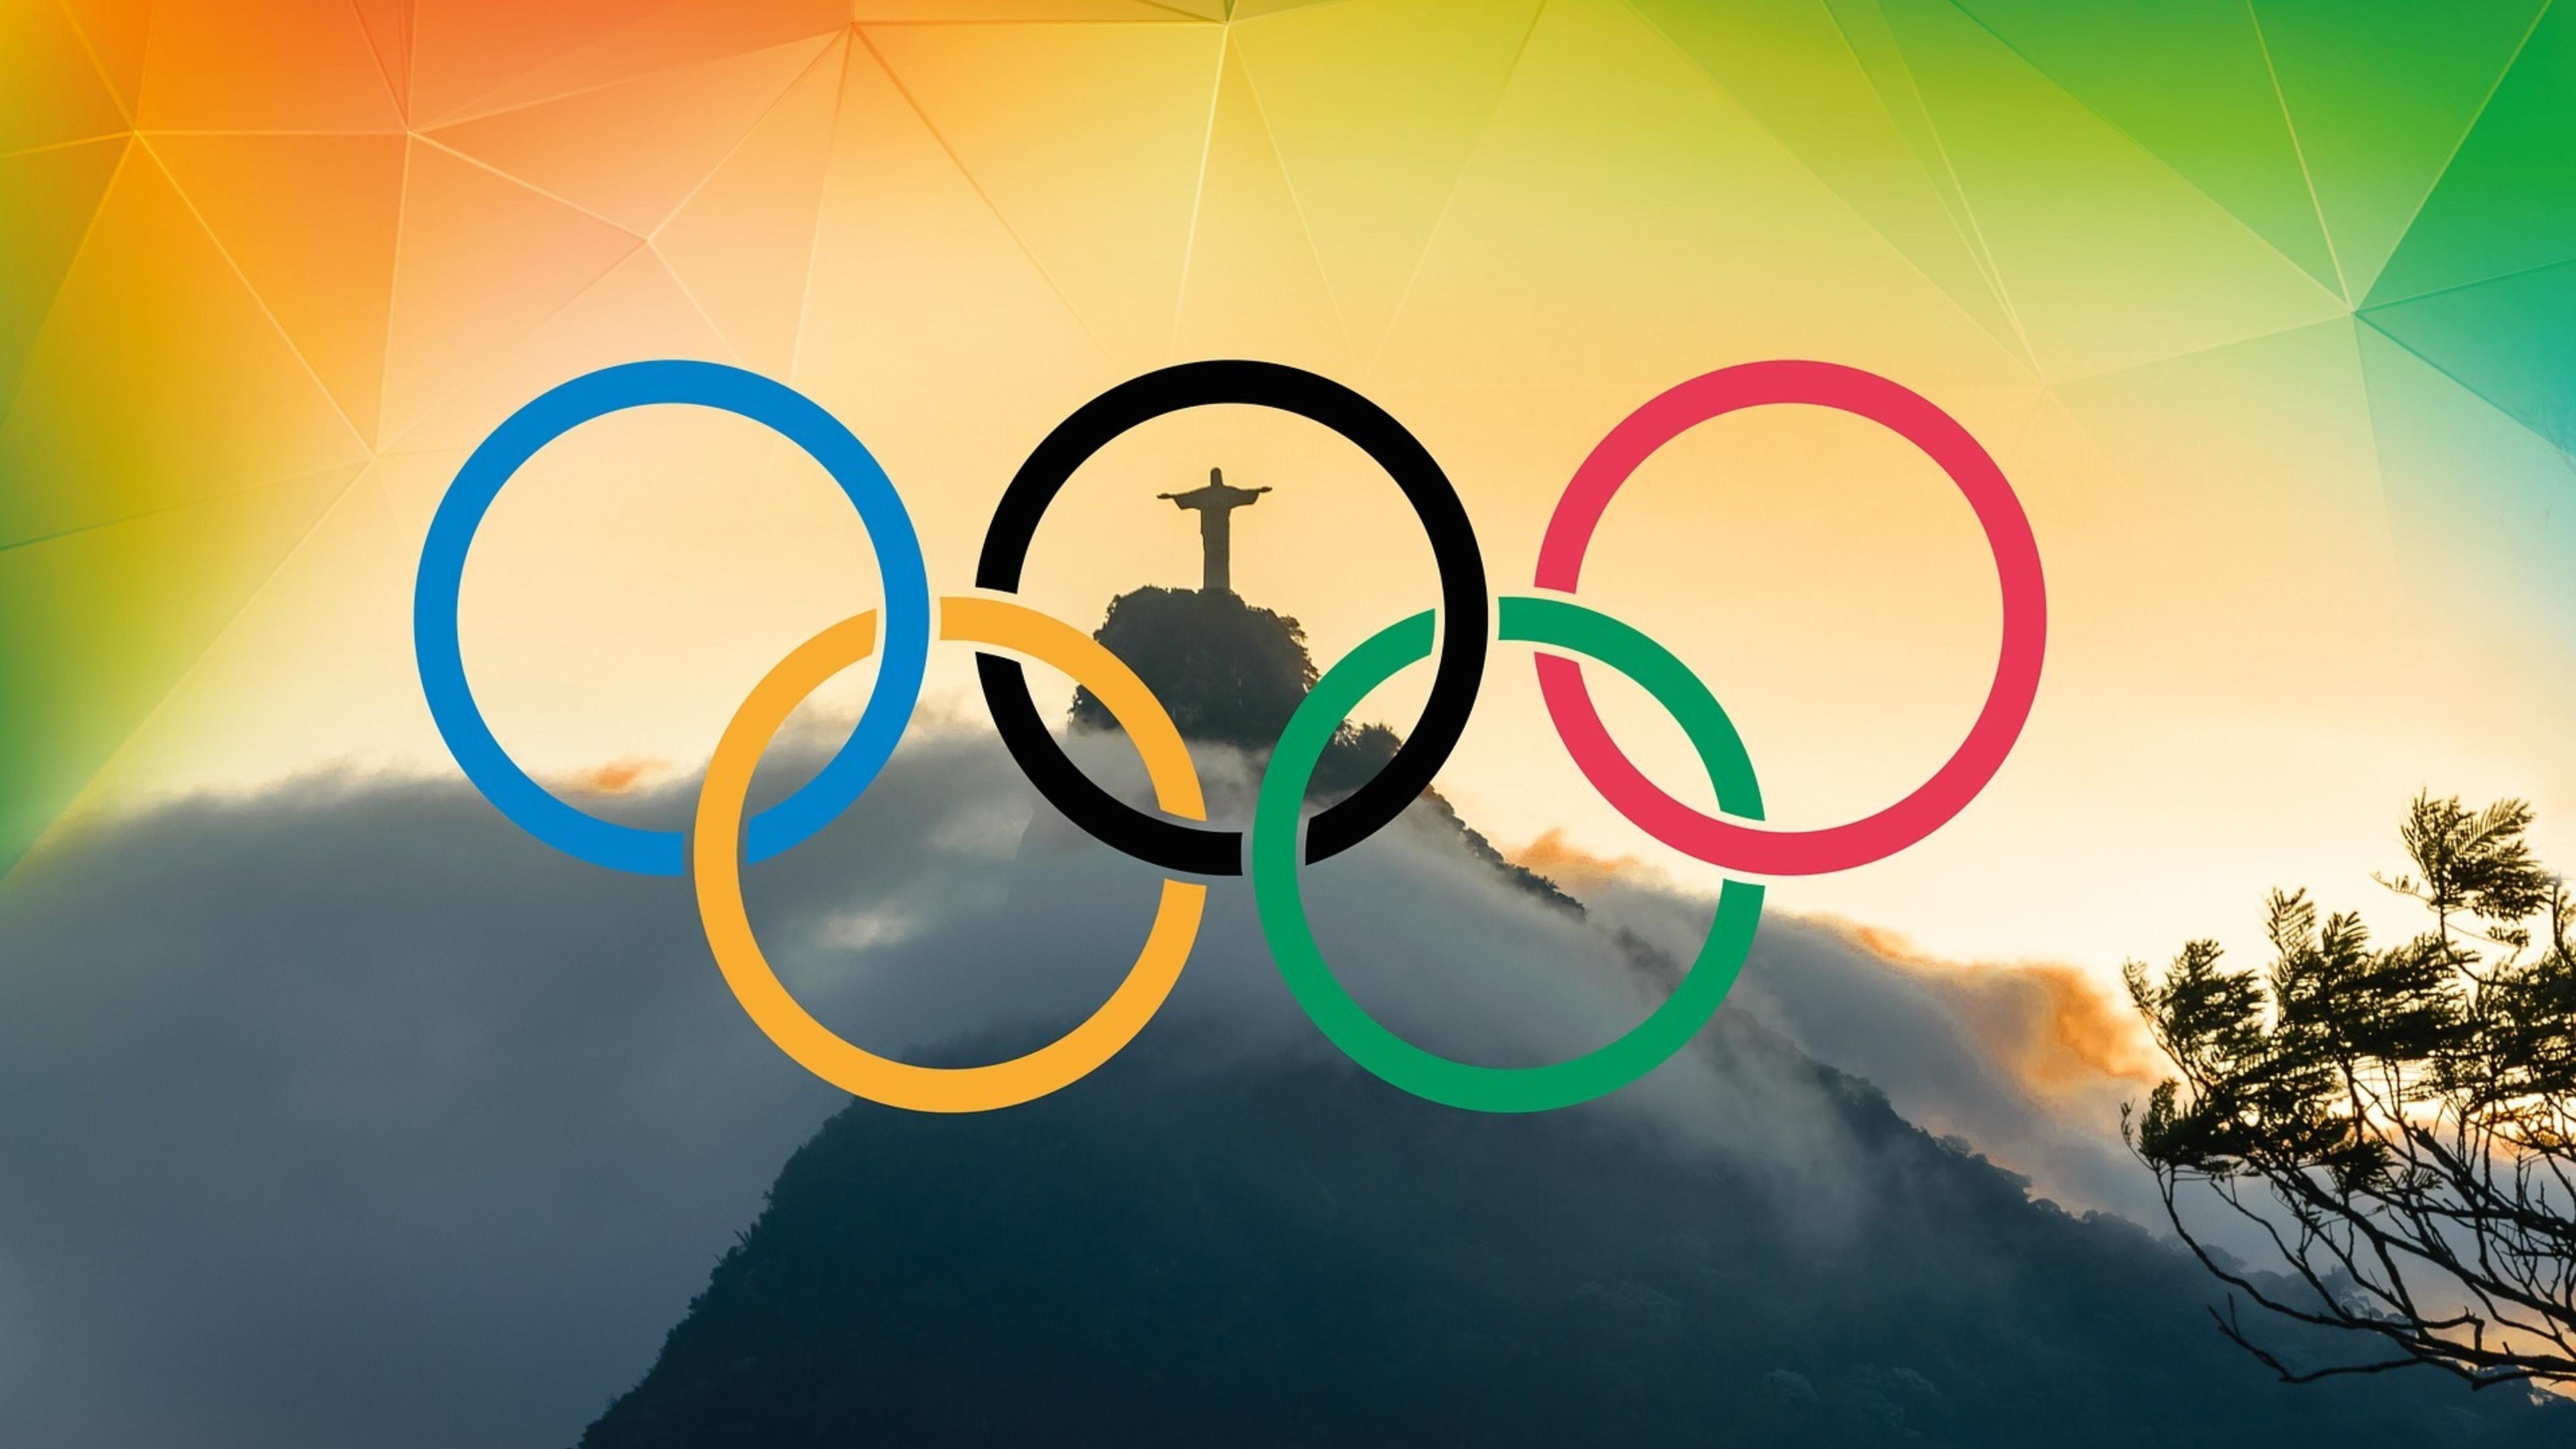 Wallpaper Weekends: Rio 2016 Olympics for Mac, iPhone, iPad